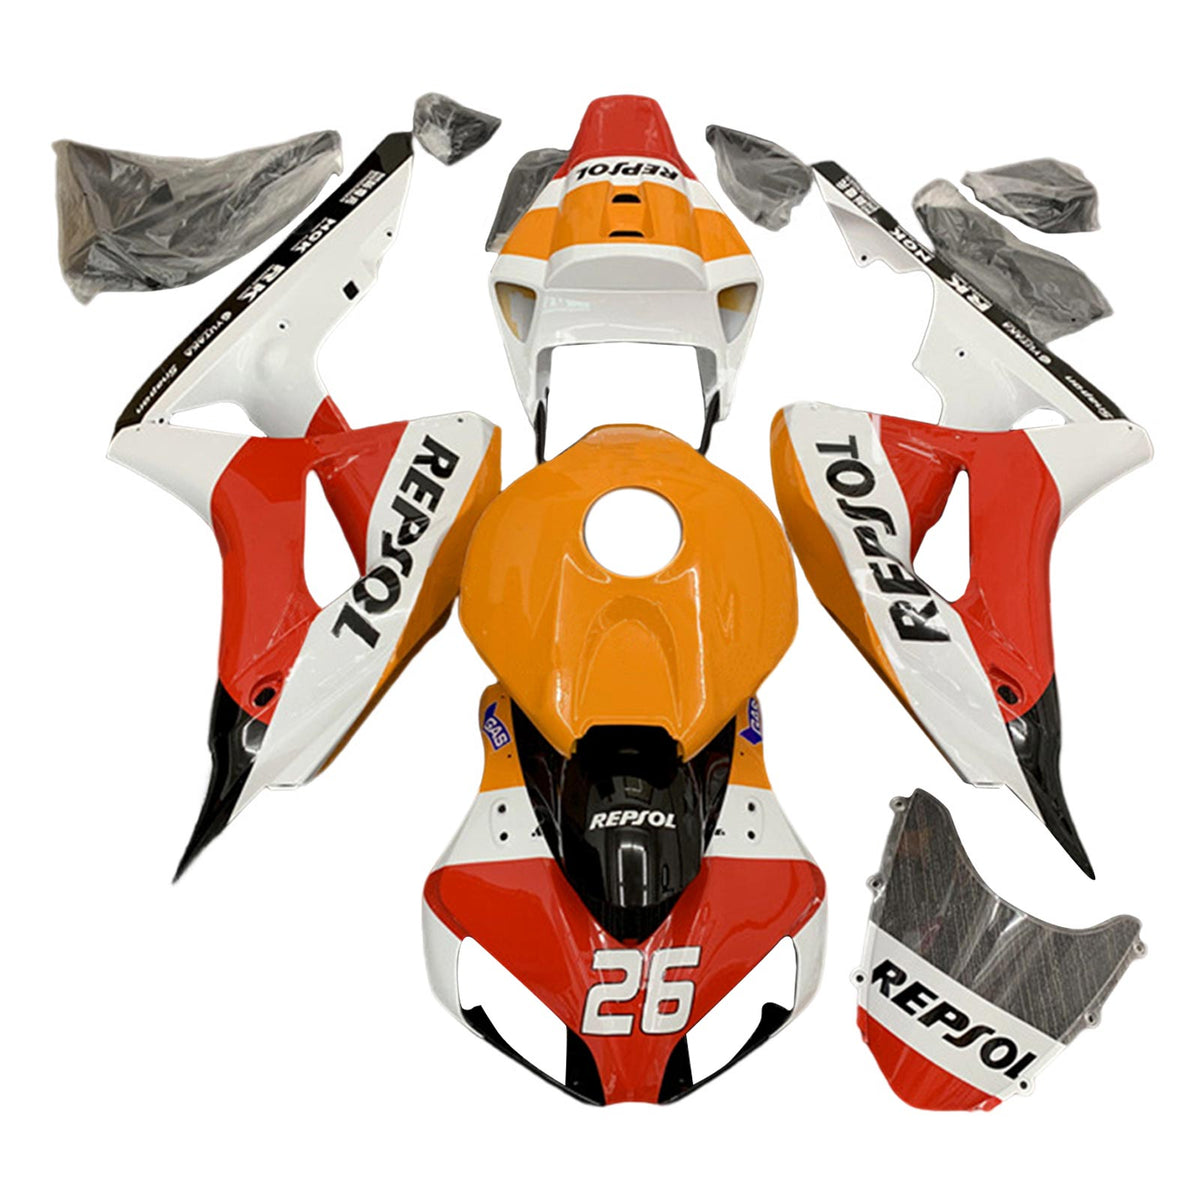 Amotopart 2006-2007 Honda CBR1000RR Kit carena Repjol arancione e rosso